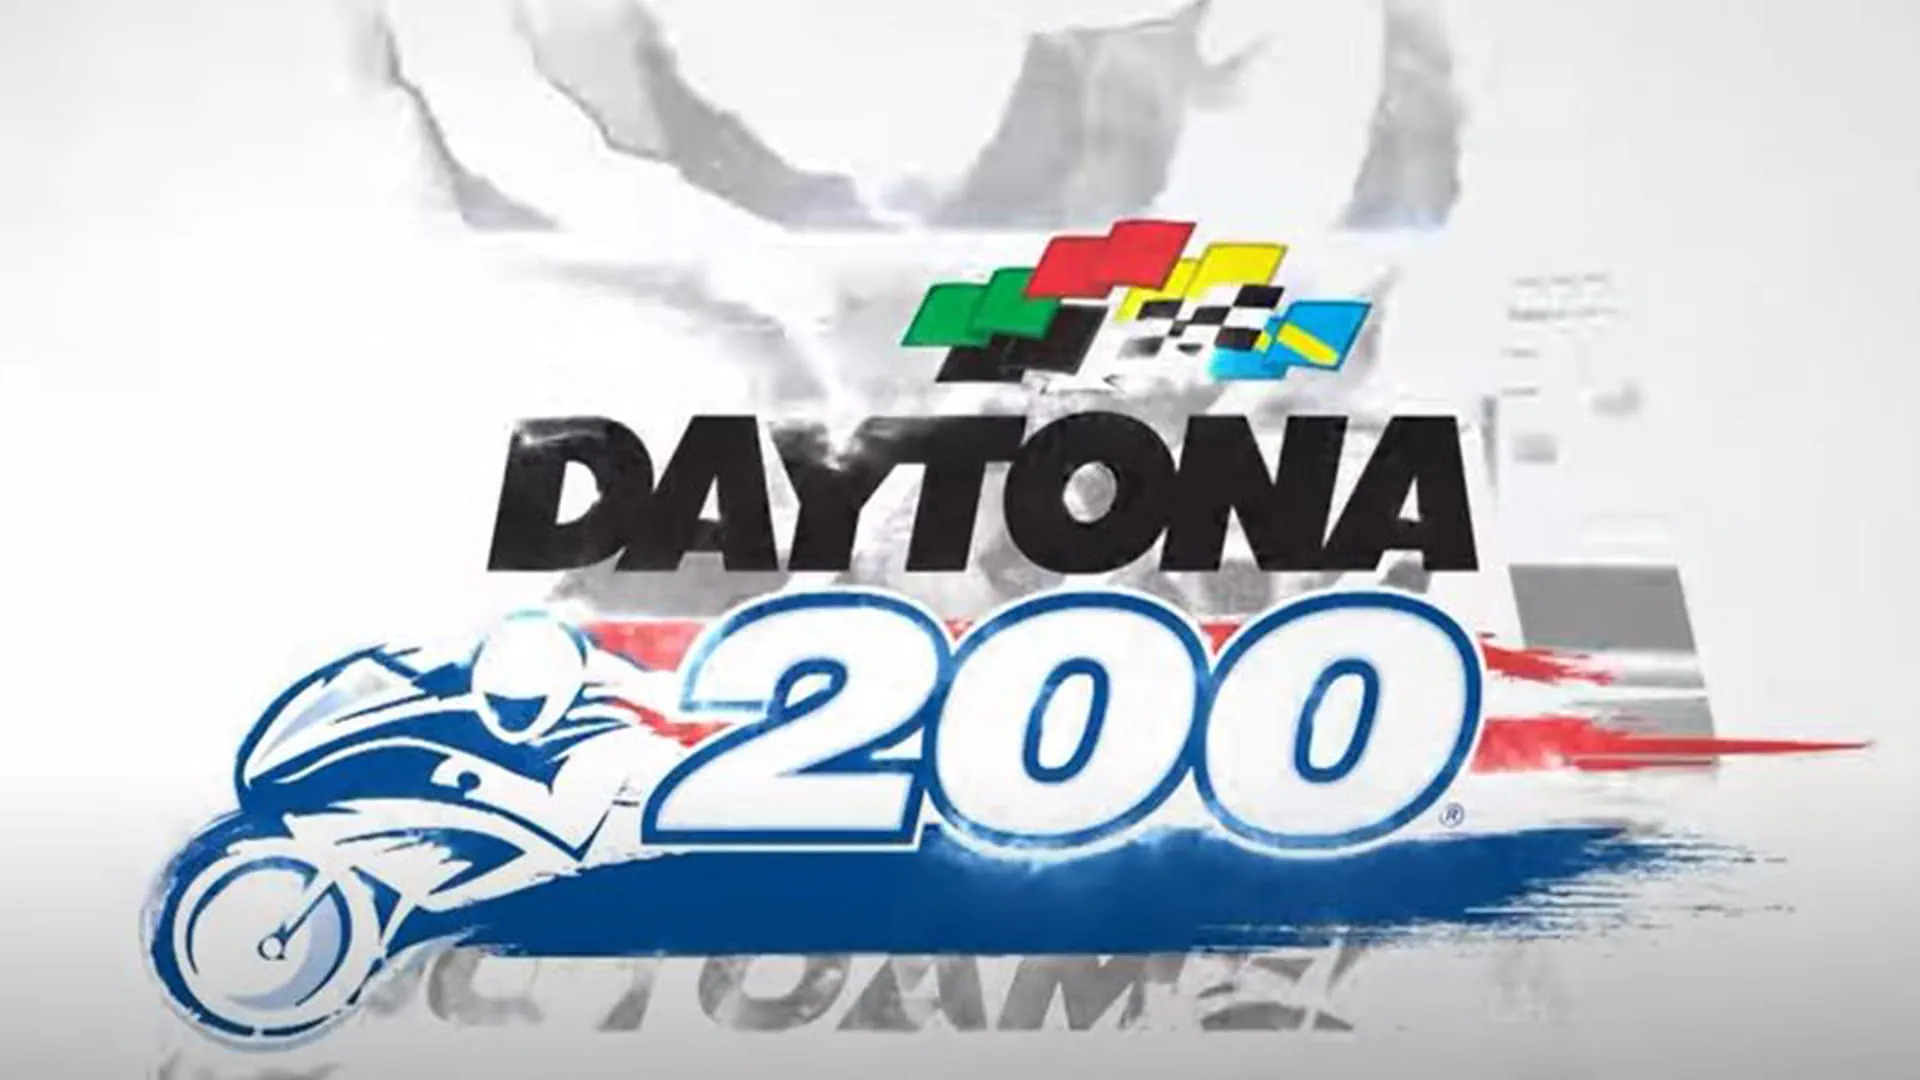 80th Daytona 200 Race